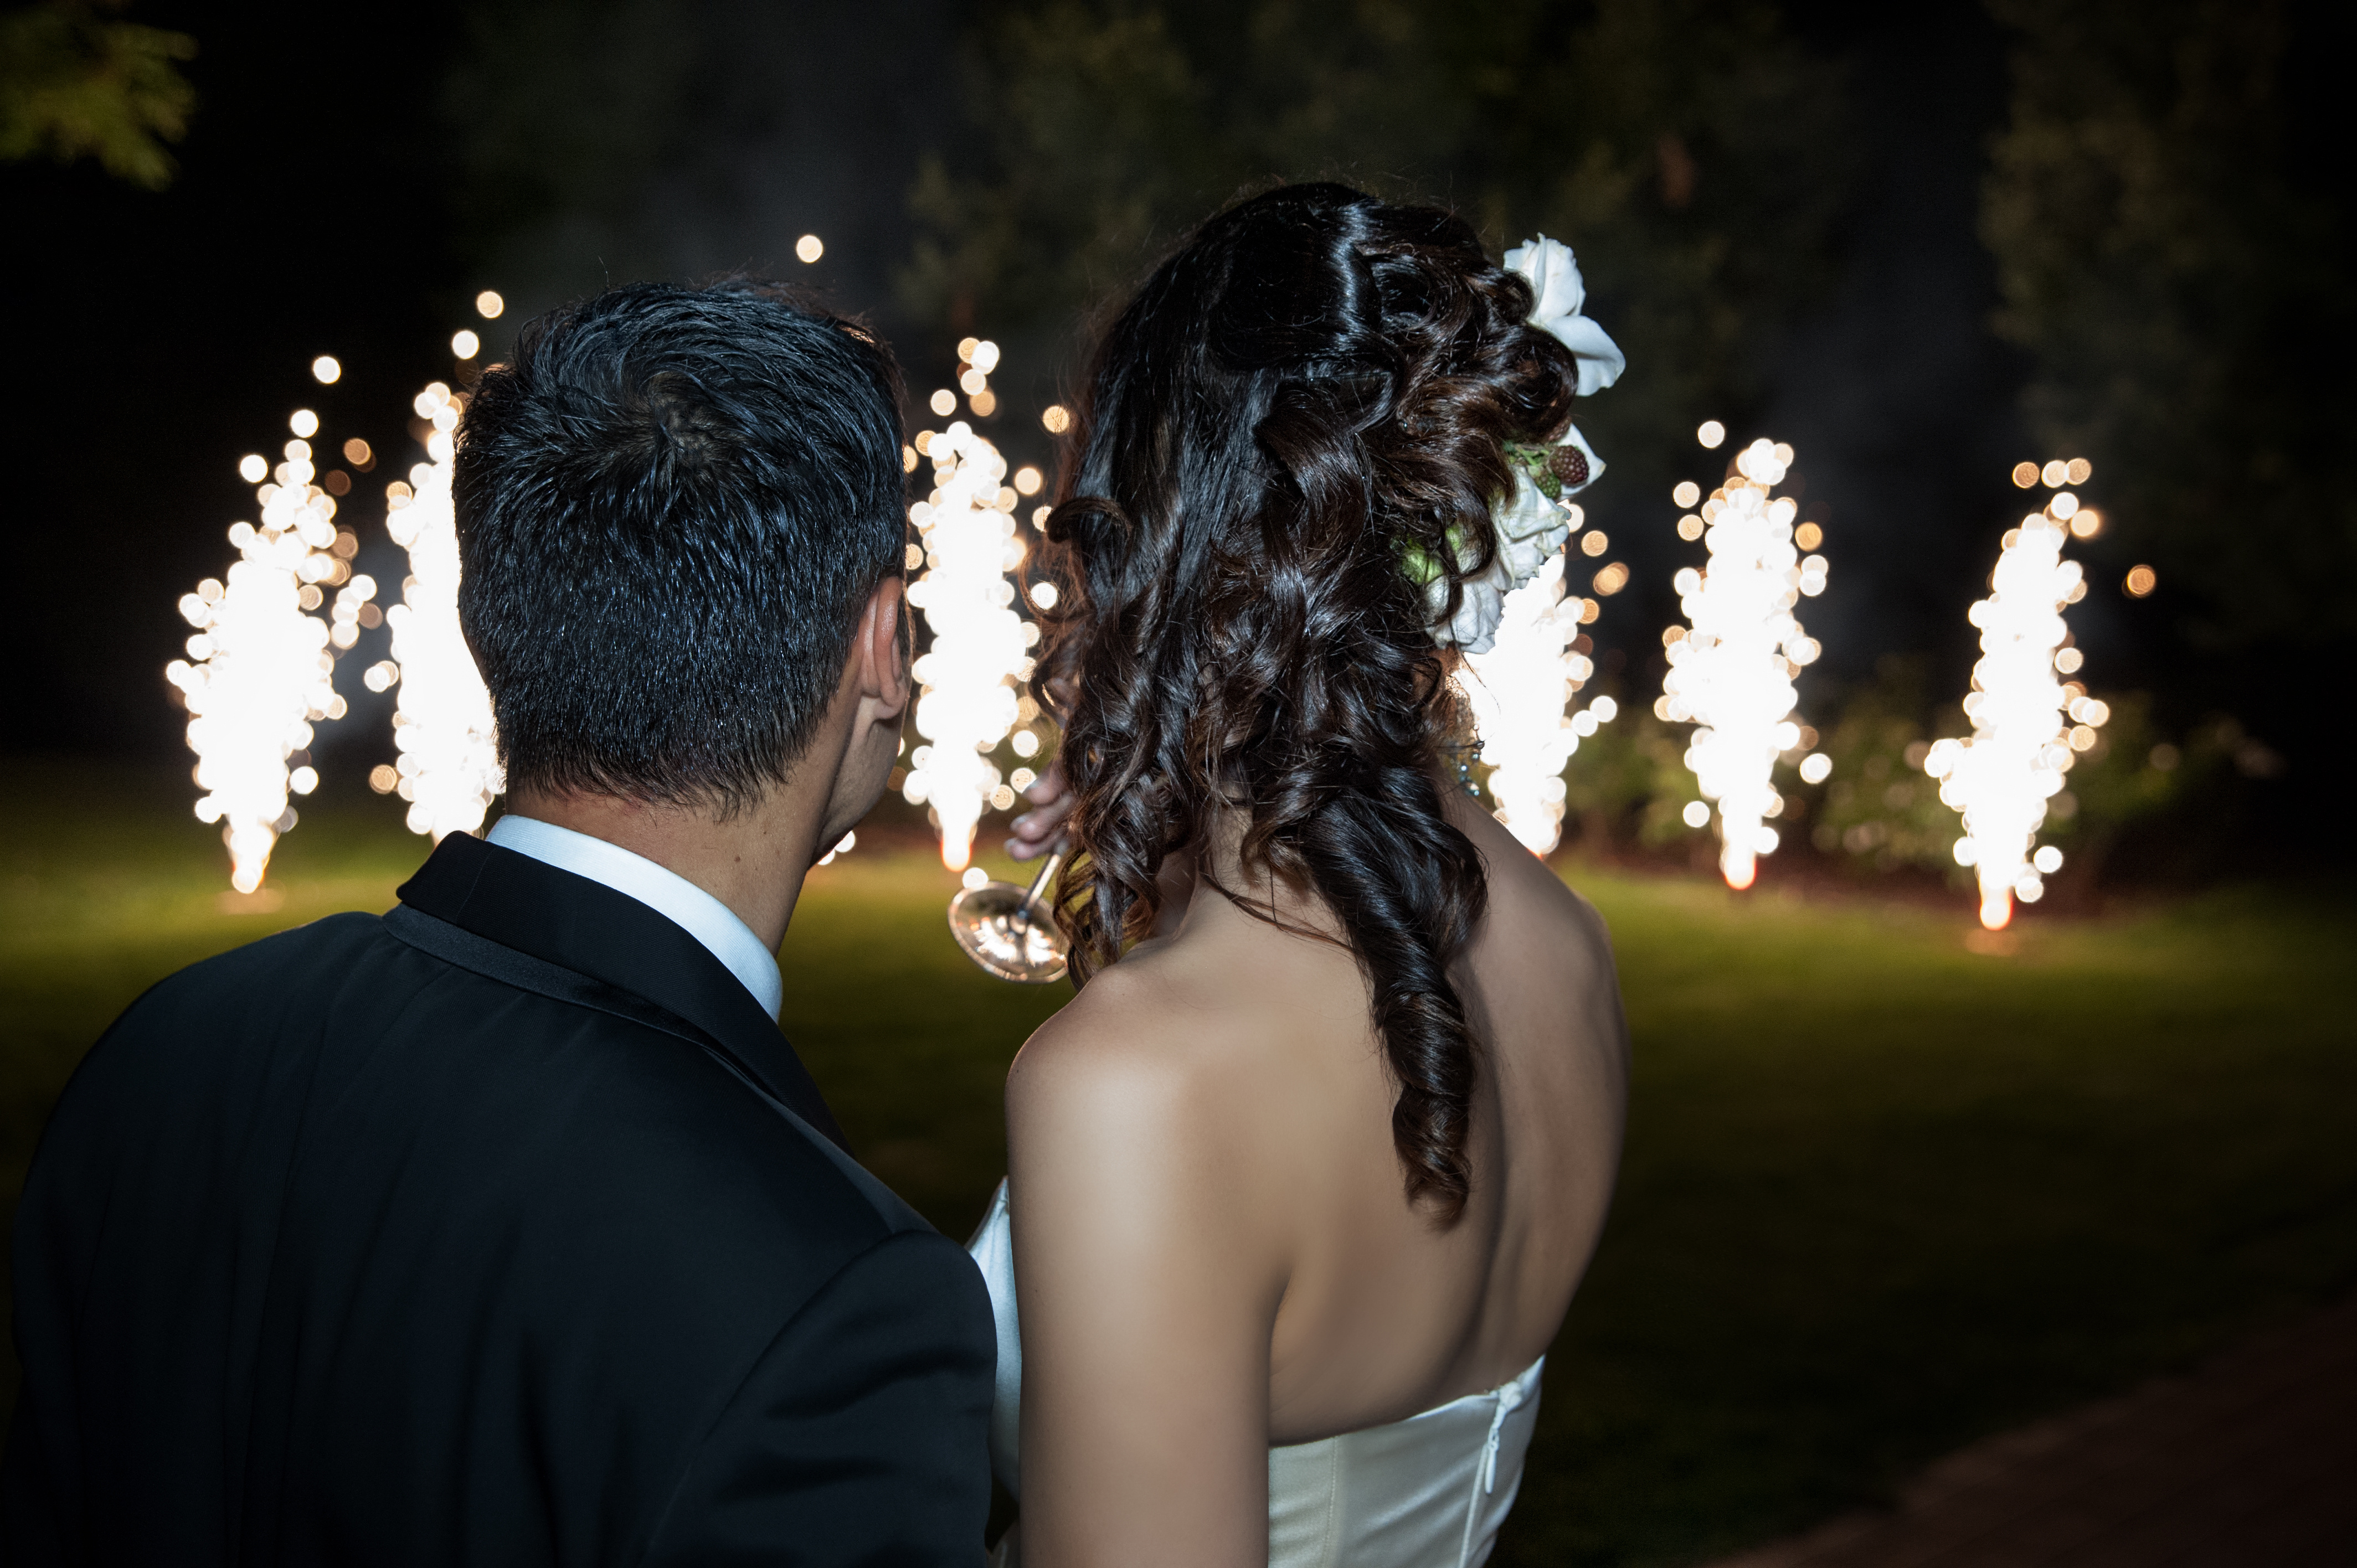 Newlyweds watch a close proximate fireworks show by a NJ wedding fireworks company